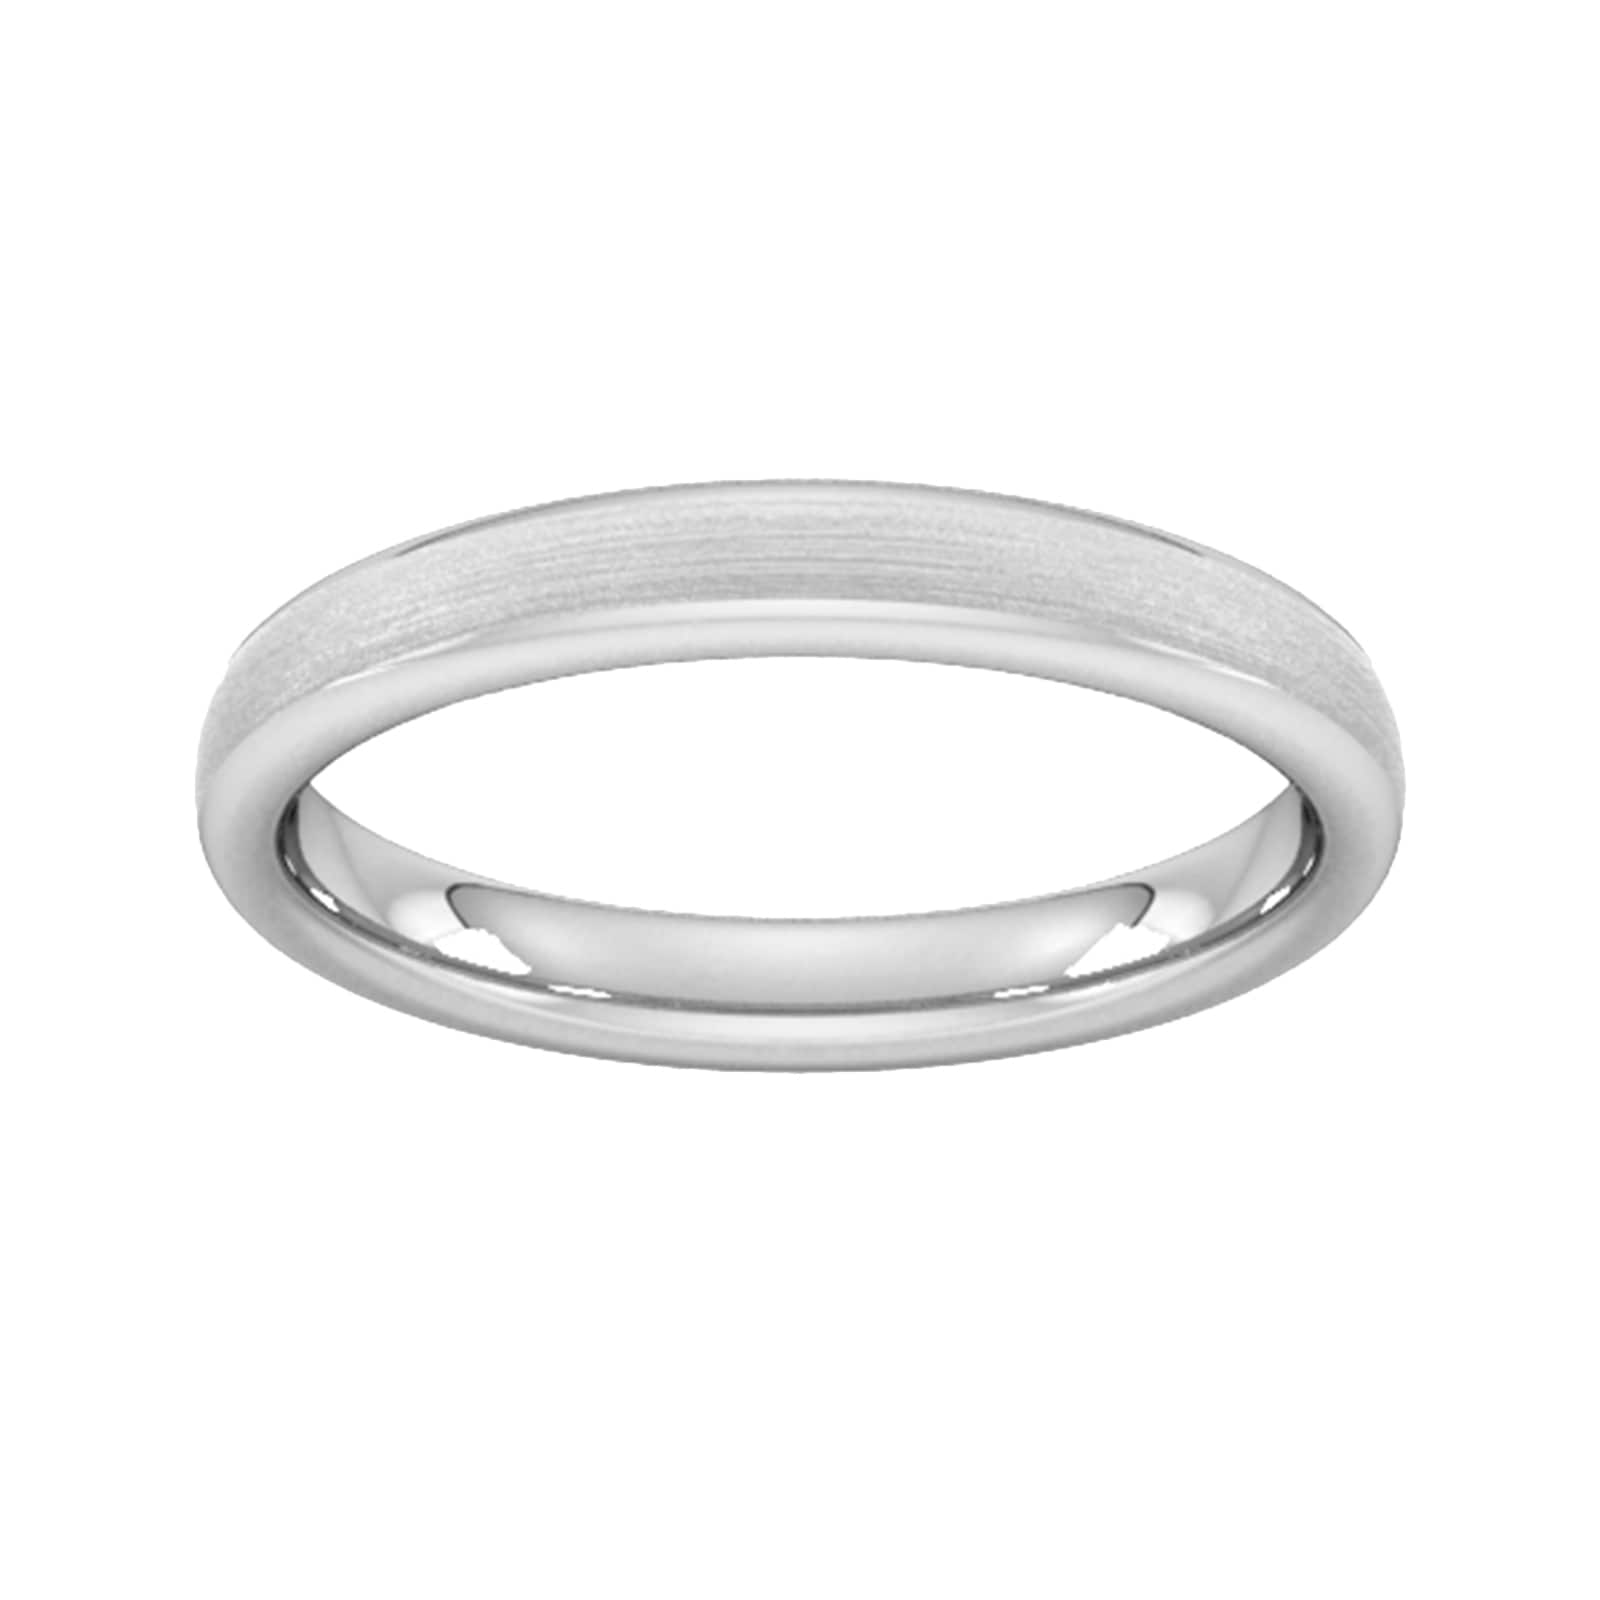 3mm D Shape Heavy Matt Finished Wedding Ring In 950 Palladium - Ring Size O